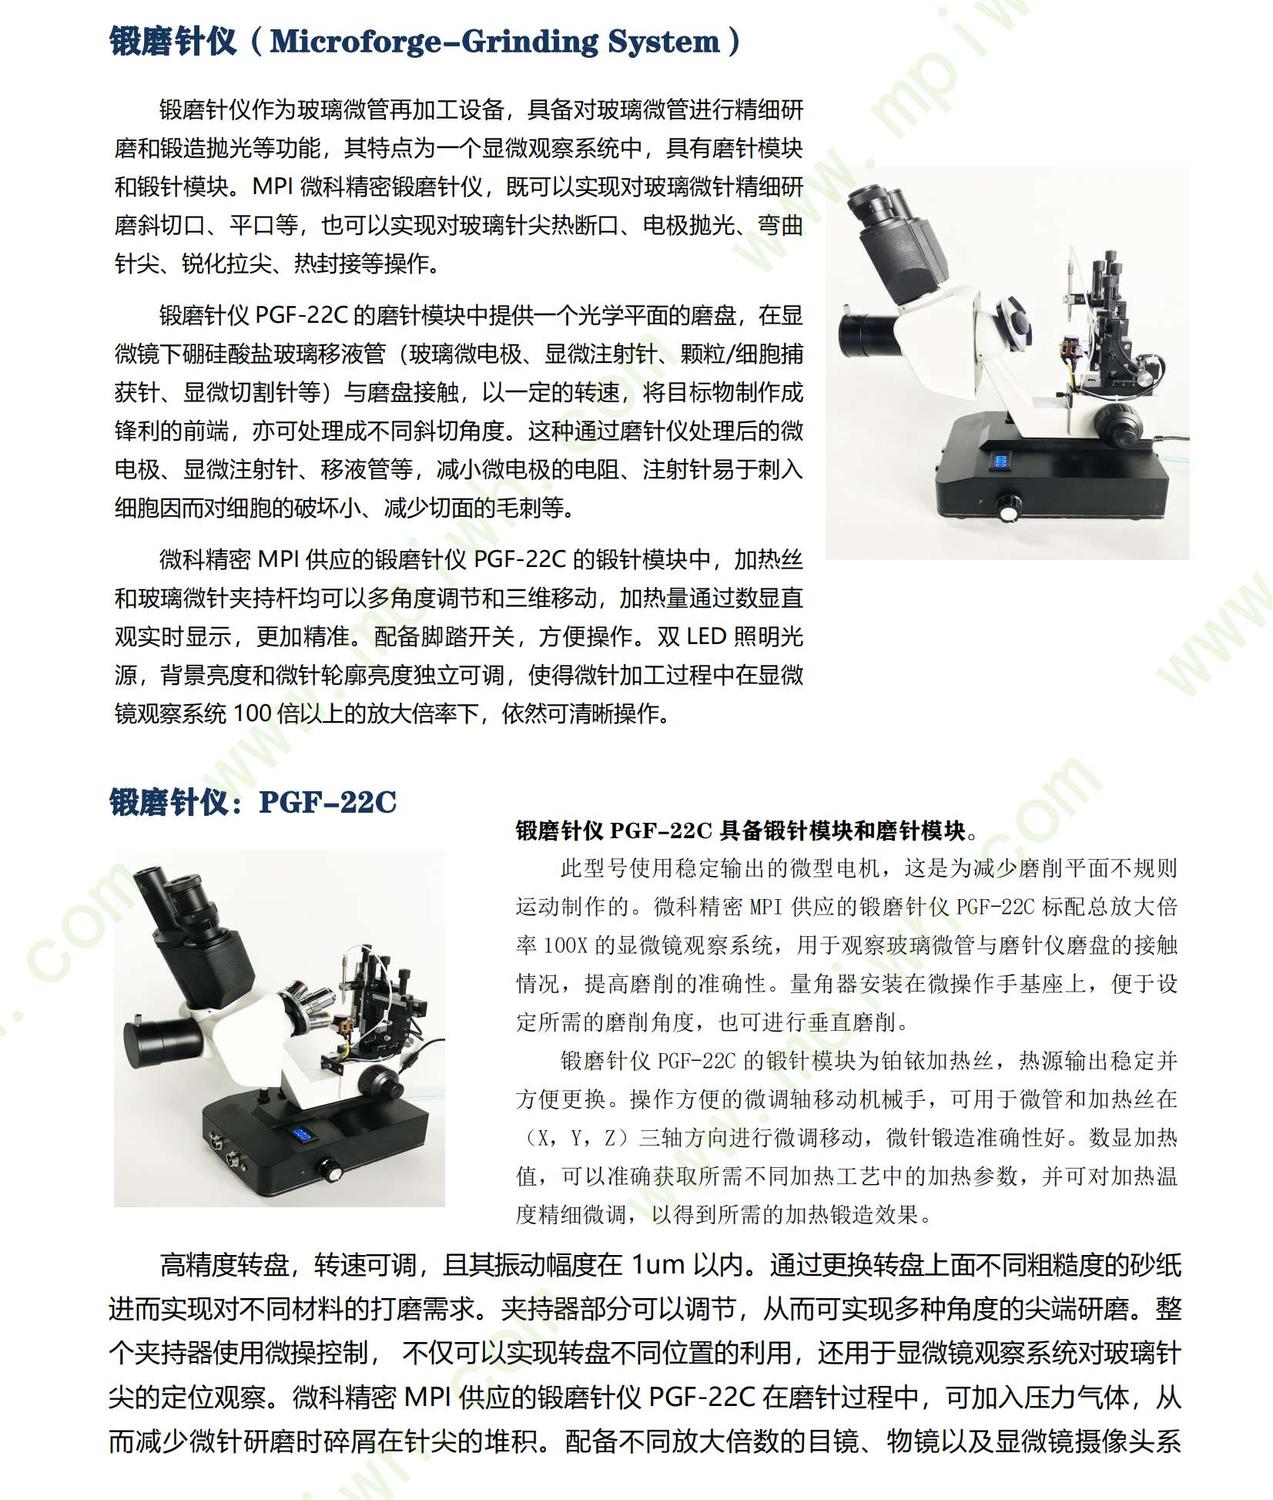 MPI锻磨针仪-PGF-22C-Gairdner-2021-网宣版（加密）-水印_00.bmp